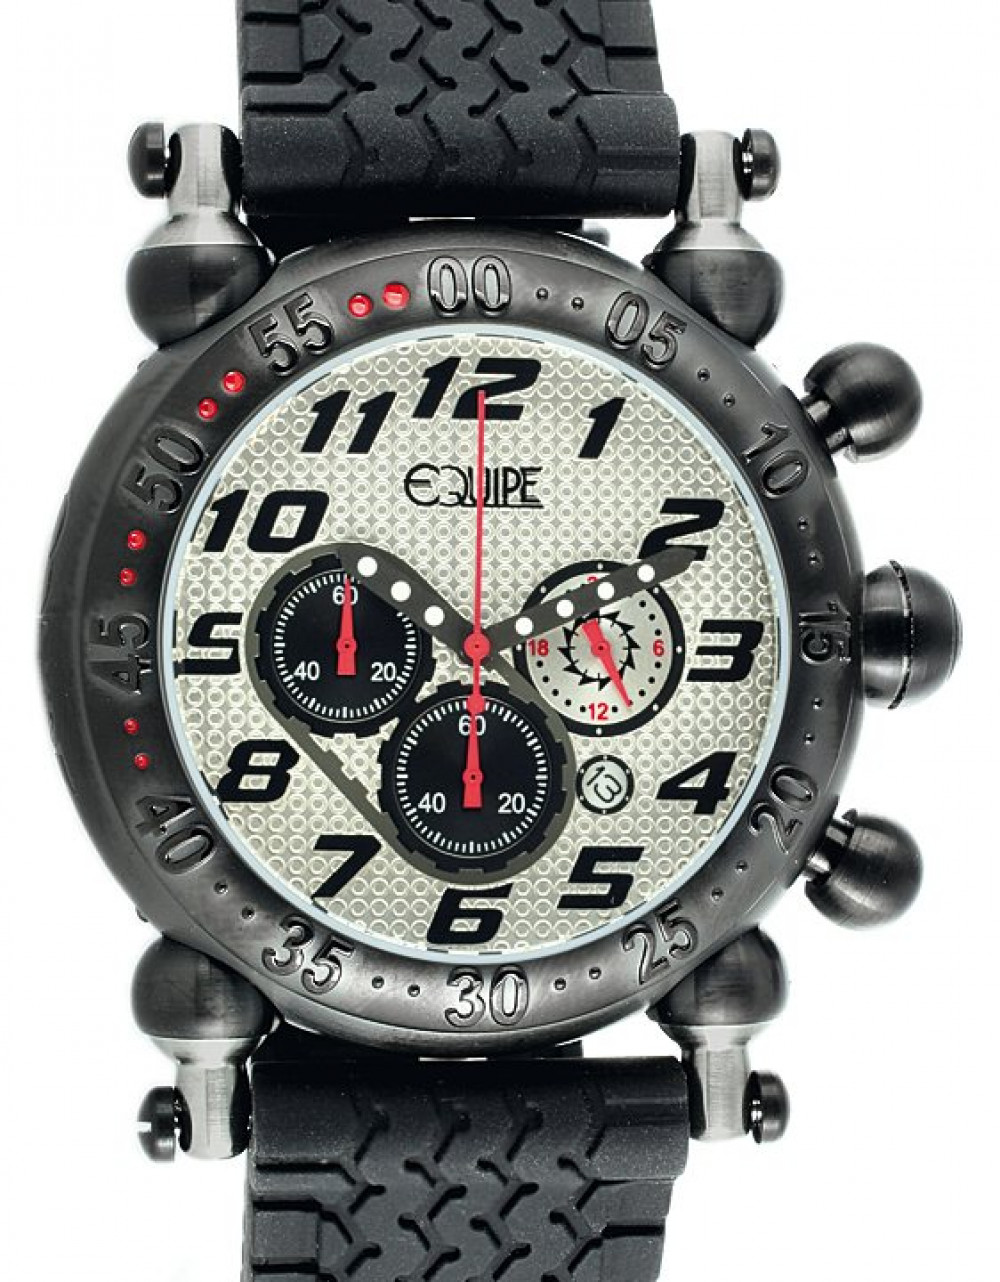 Zegarek firmy Equipe, model Balljoint